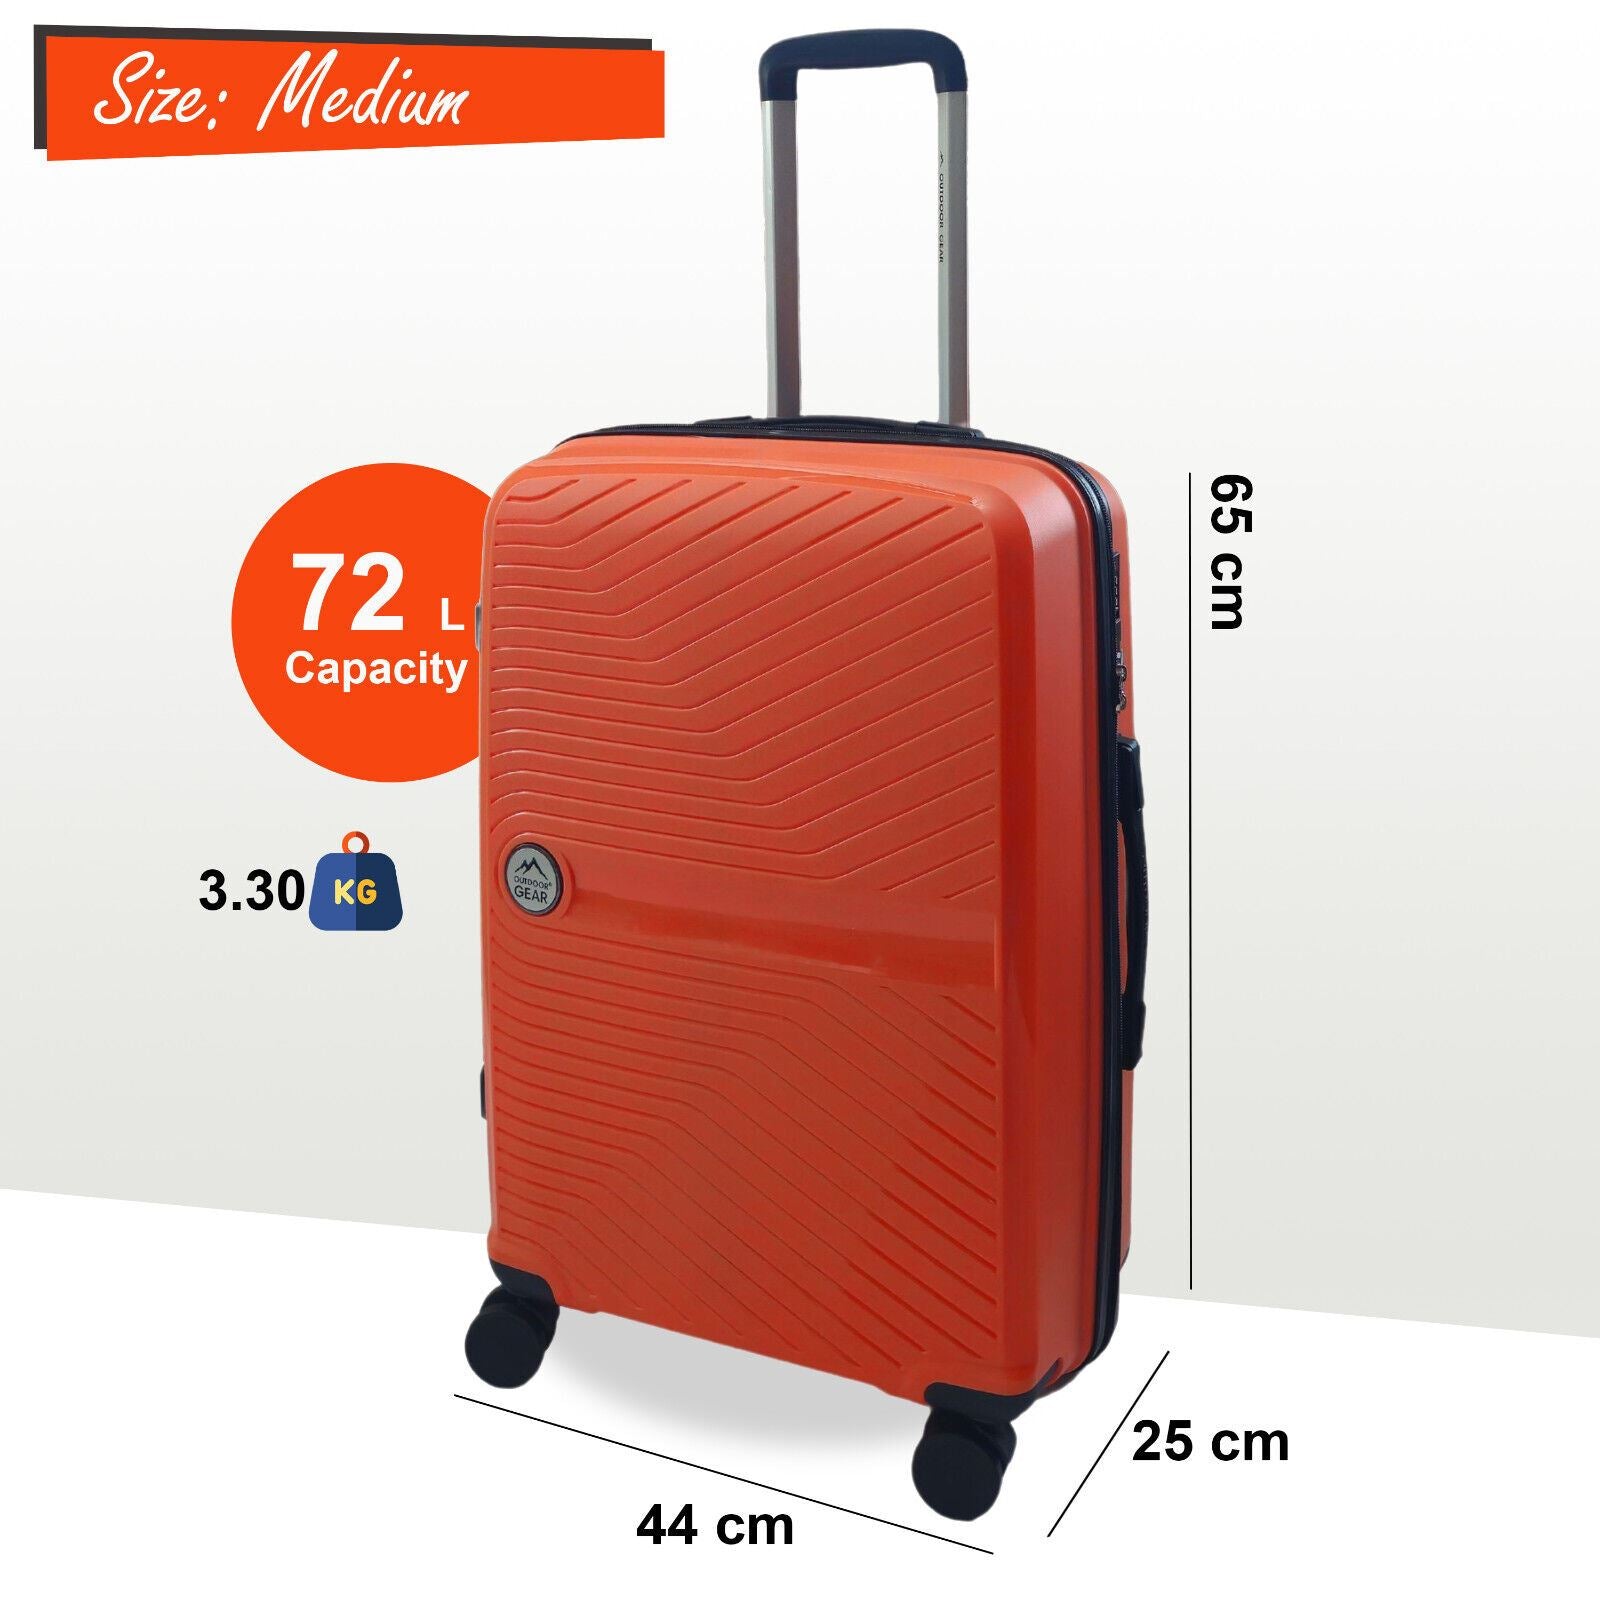 Abbeville Medium Hard Shell Suitcase in Orange